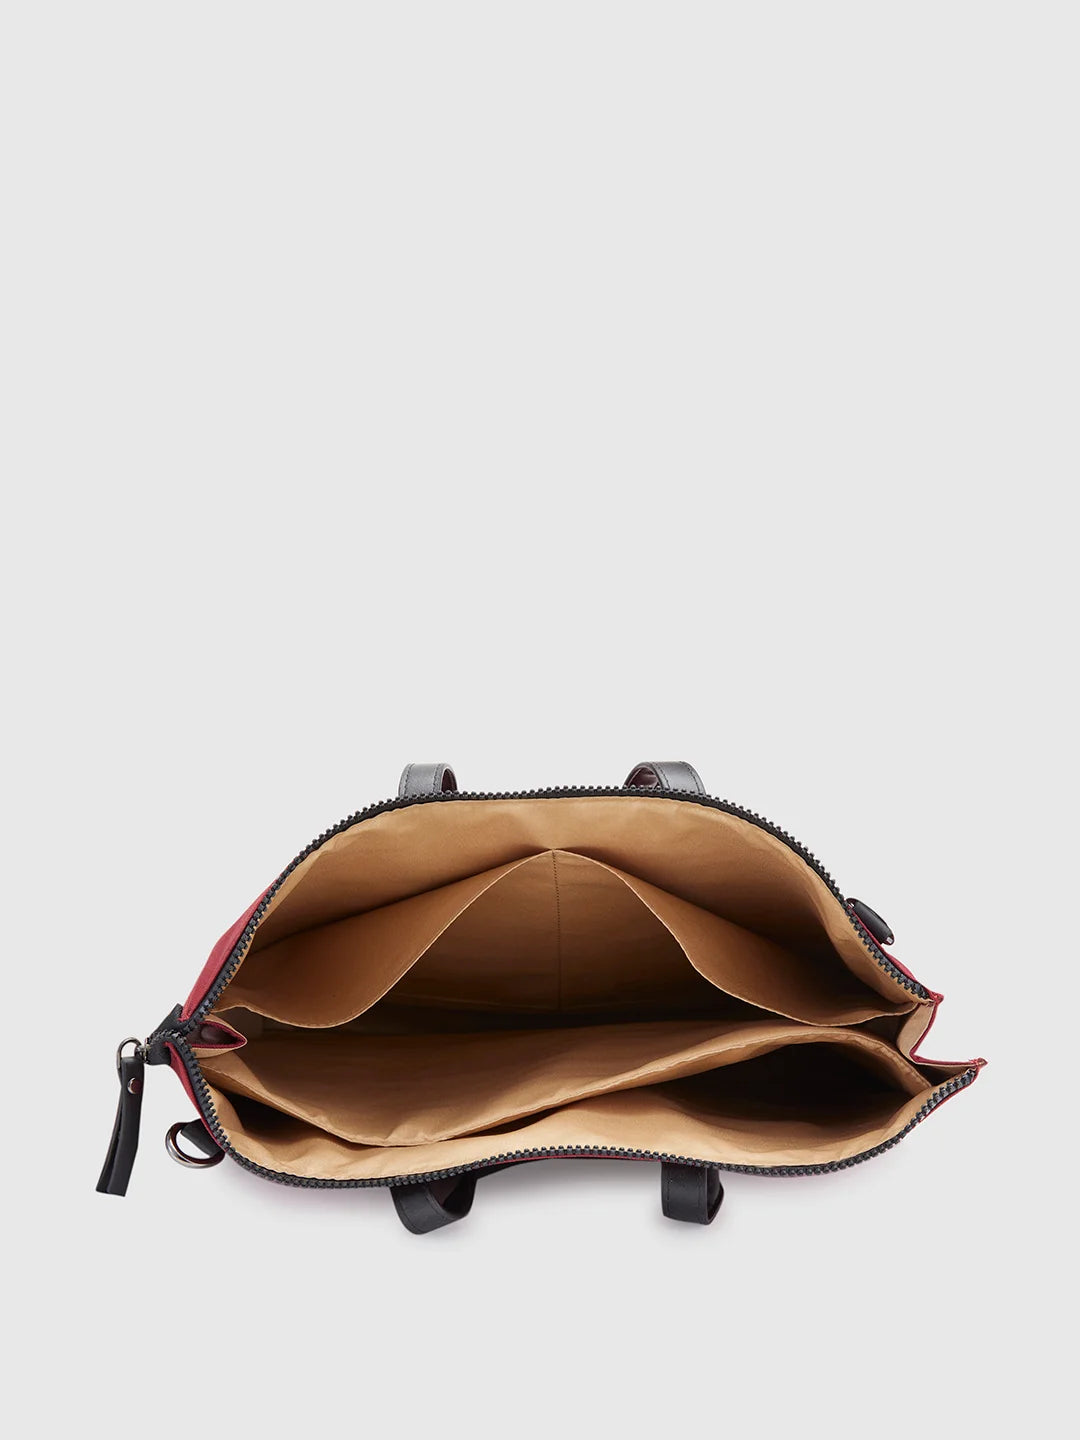 Buy Leather Tote Bag Large Laptop Work Personalized Purse Handmade Handbag  Shopper Tote Women Anniversary Gift Shopper Bag Mom Crossbody Tote Online  in India - … | Leather tote bag, Laptop bag